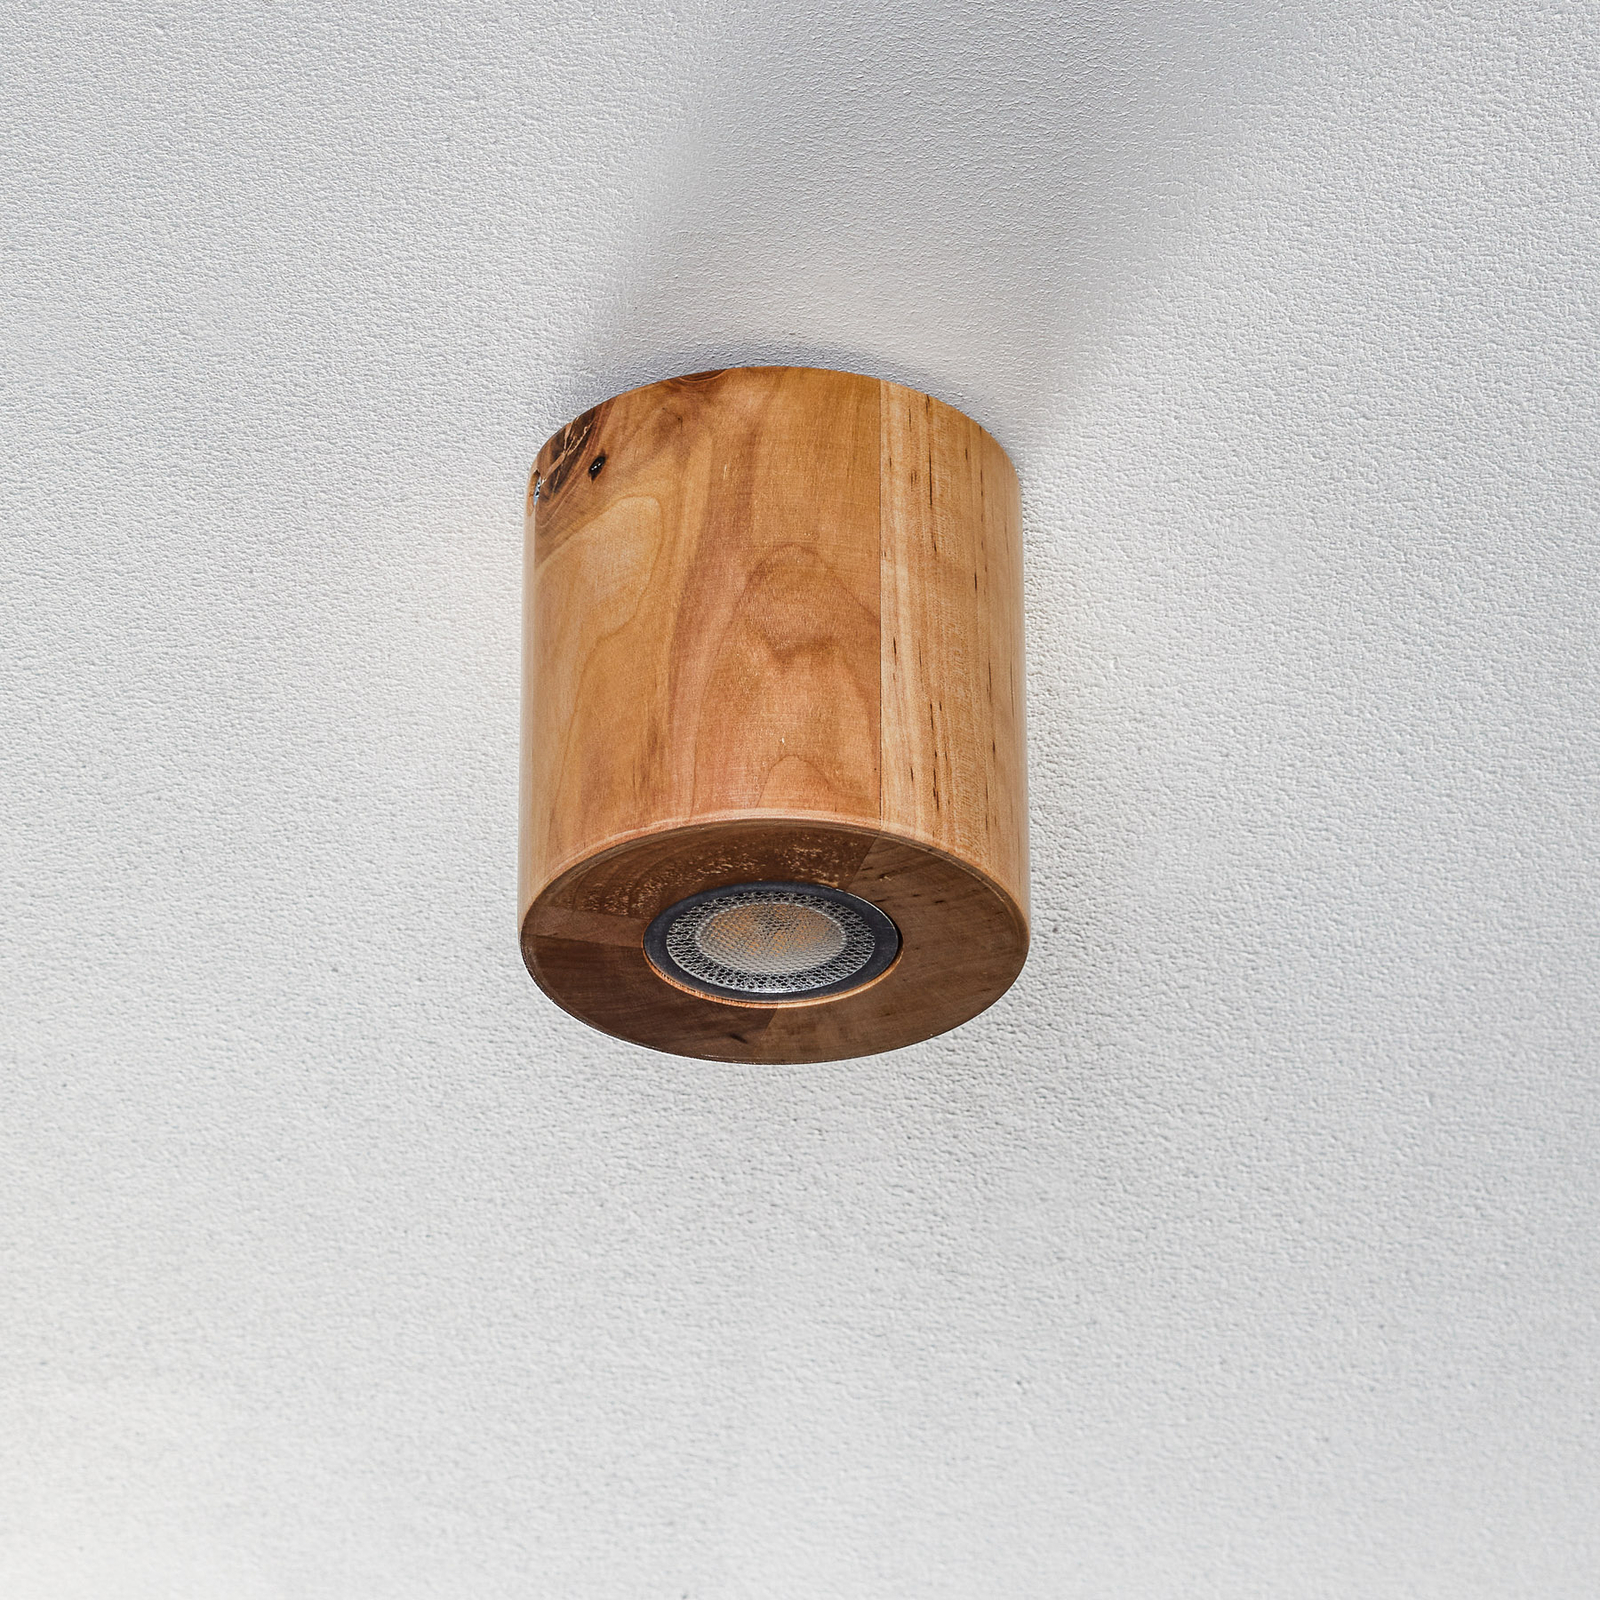 Ara ceiling light as a wooden cylinder